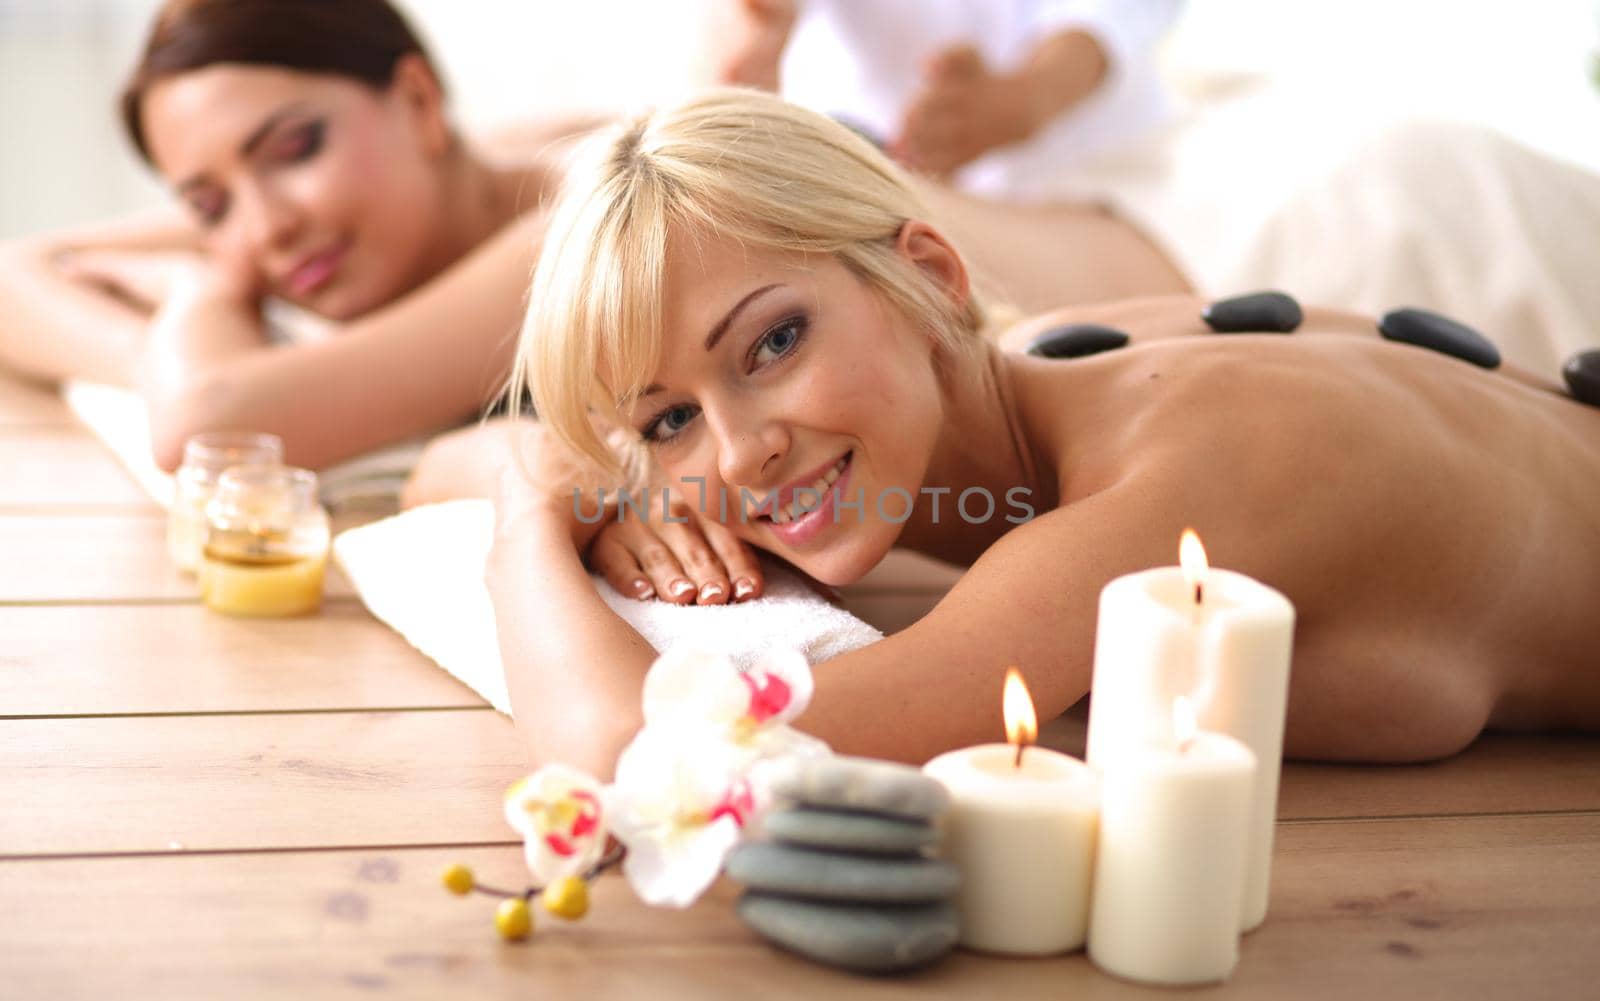 Two young beautiful women relaxing and enjoying at the spa center by lenetstan